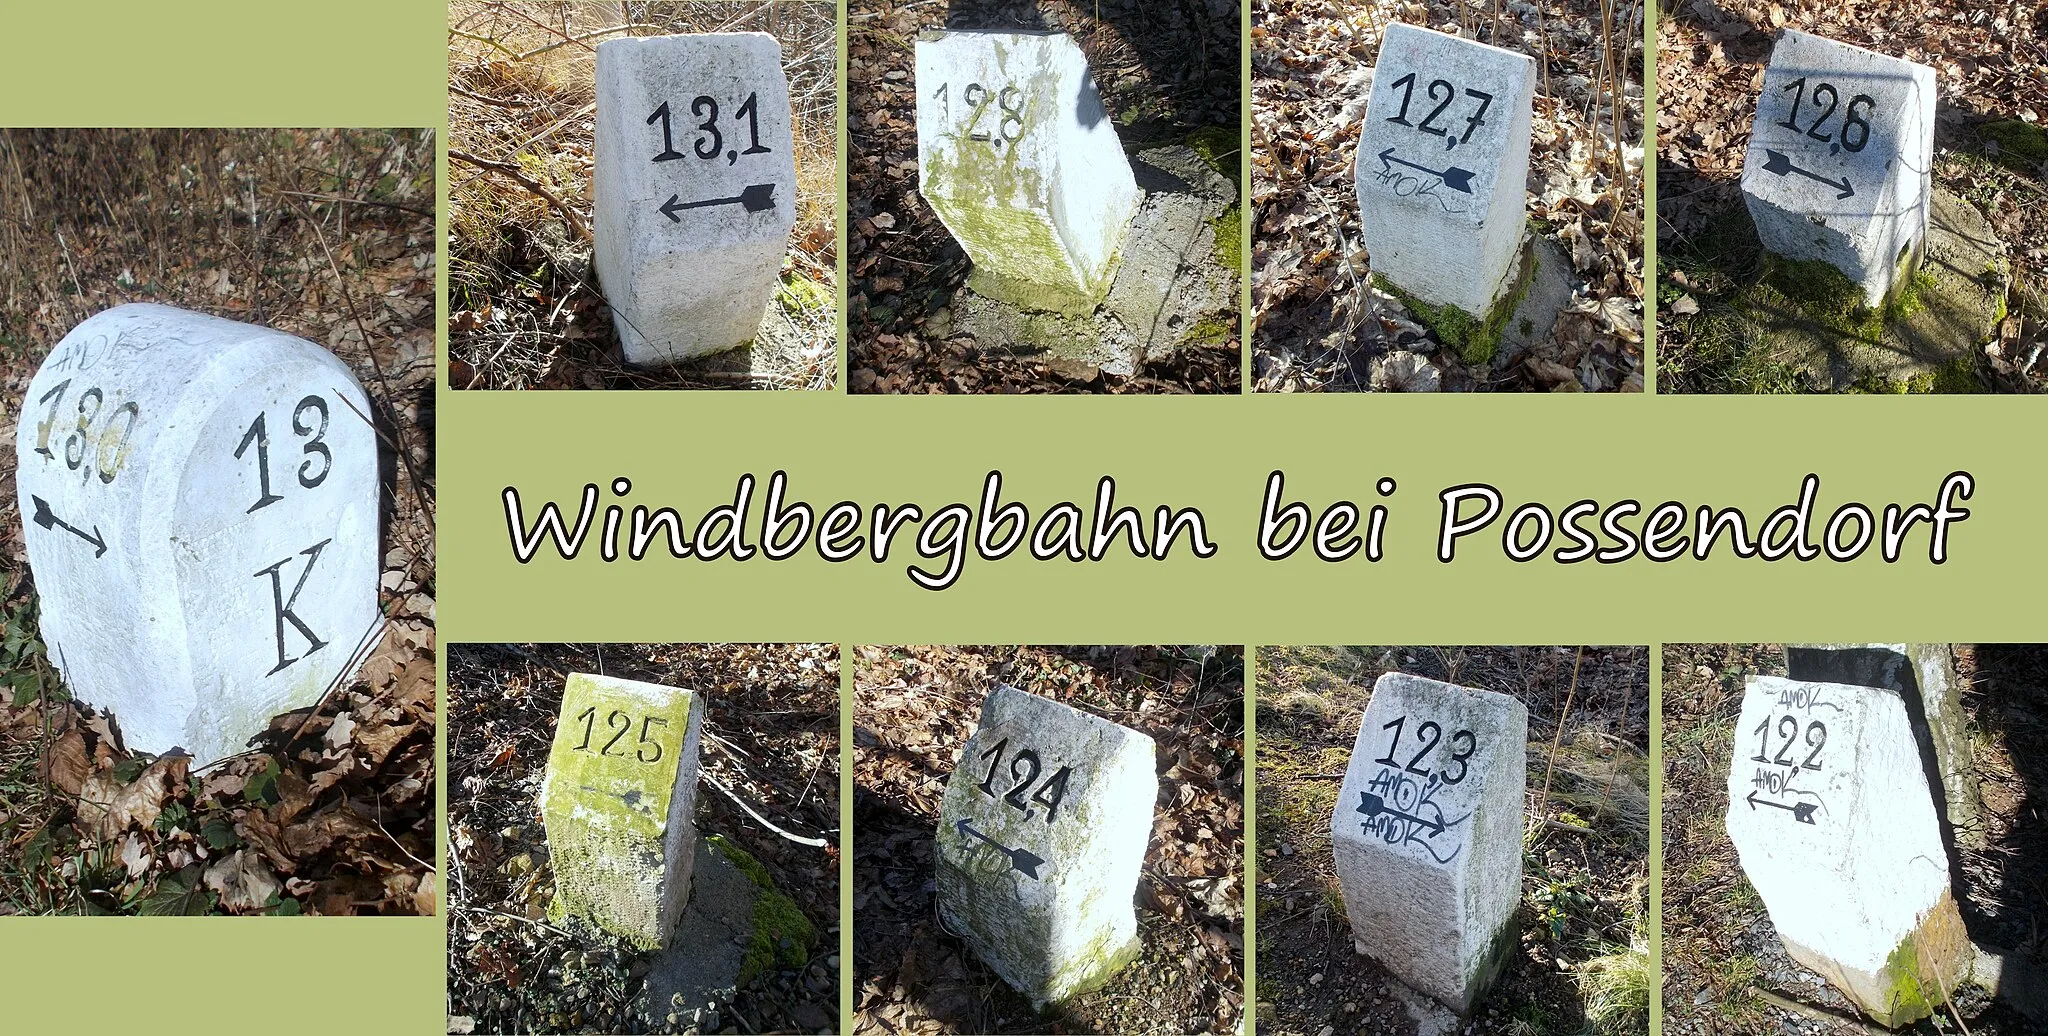 Photo showing: 2018 Possendorf ehemalige Windbergbahn